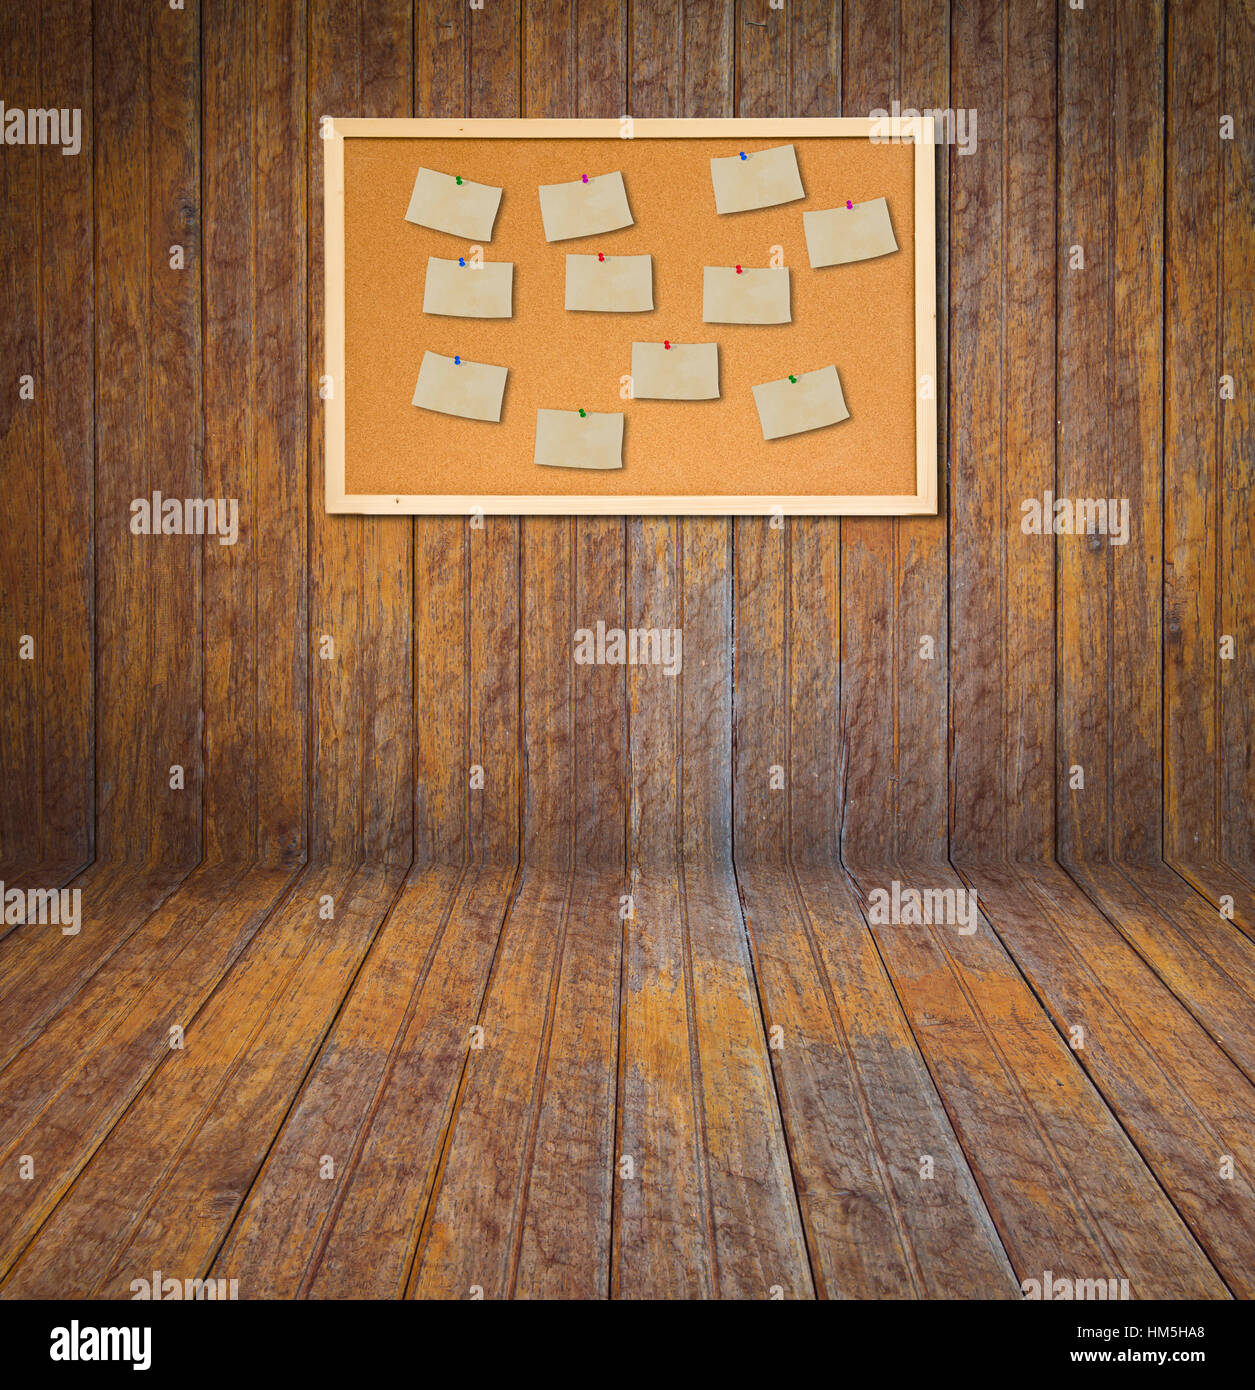 https://c8.alamy.com/compes/hm5ha8/tablon-de-anuncios-de-corcho-con-papel-antiguo-nota-sobre-la-pared-de-madera-hm5ha8.jpg